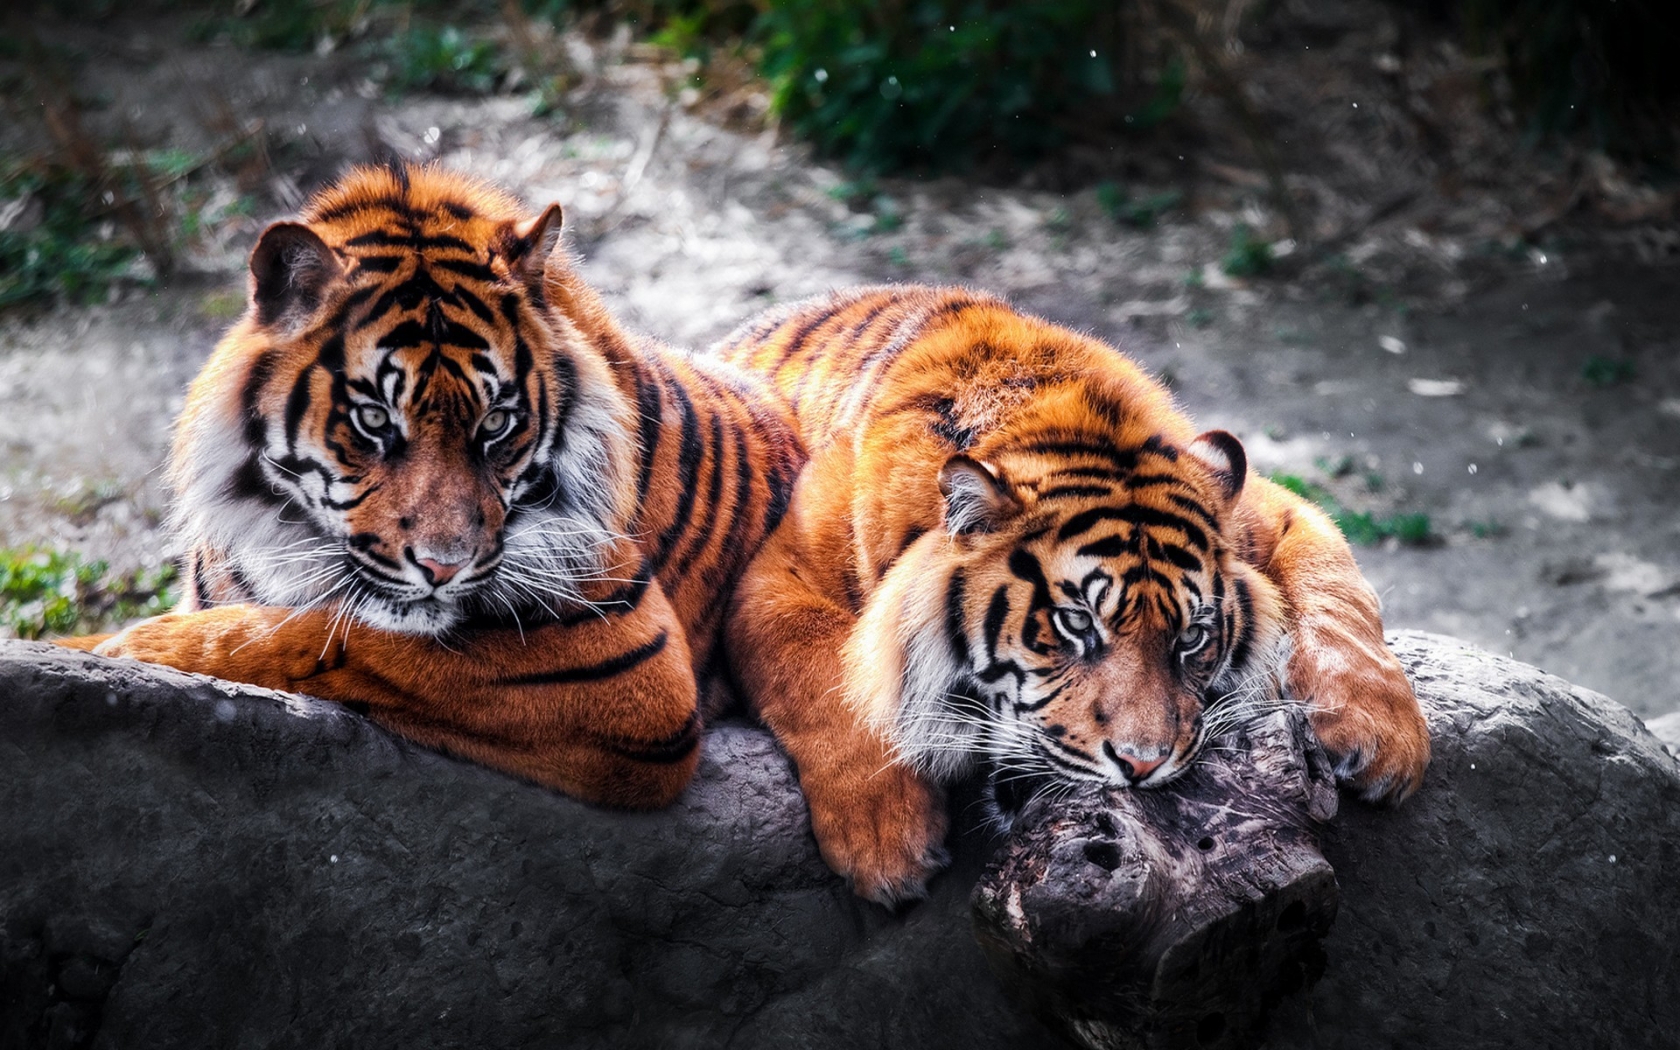 Tiger, Wildlife, Bengal Tiger wallpaper widescreen | Best Free wallpapers